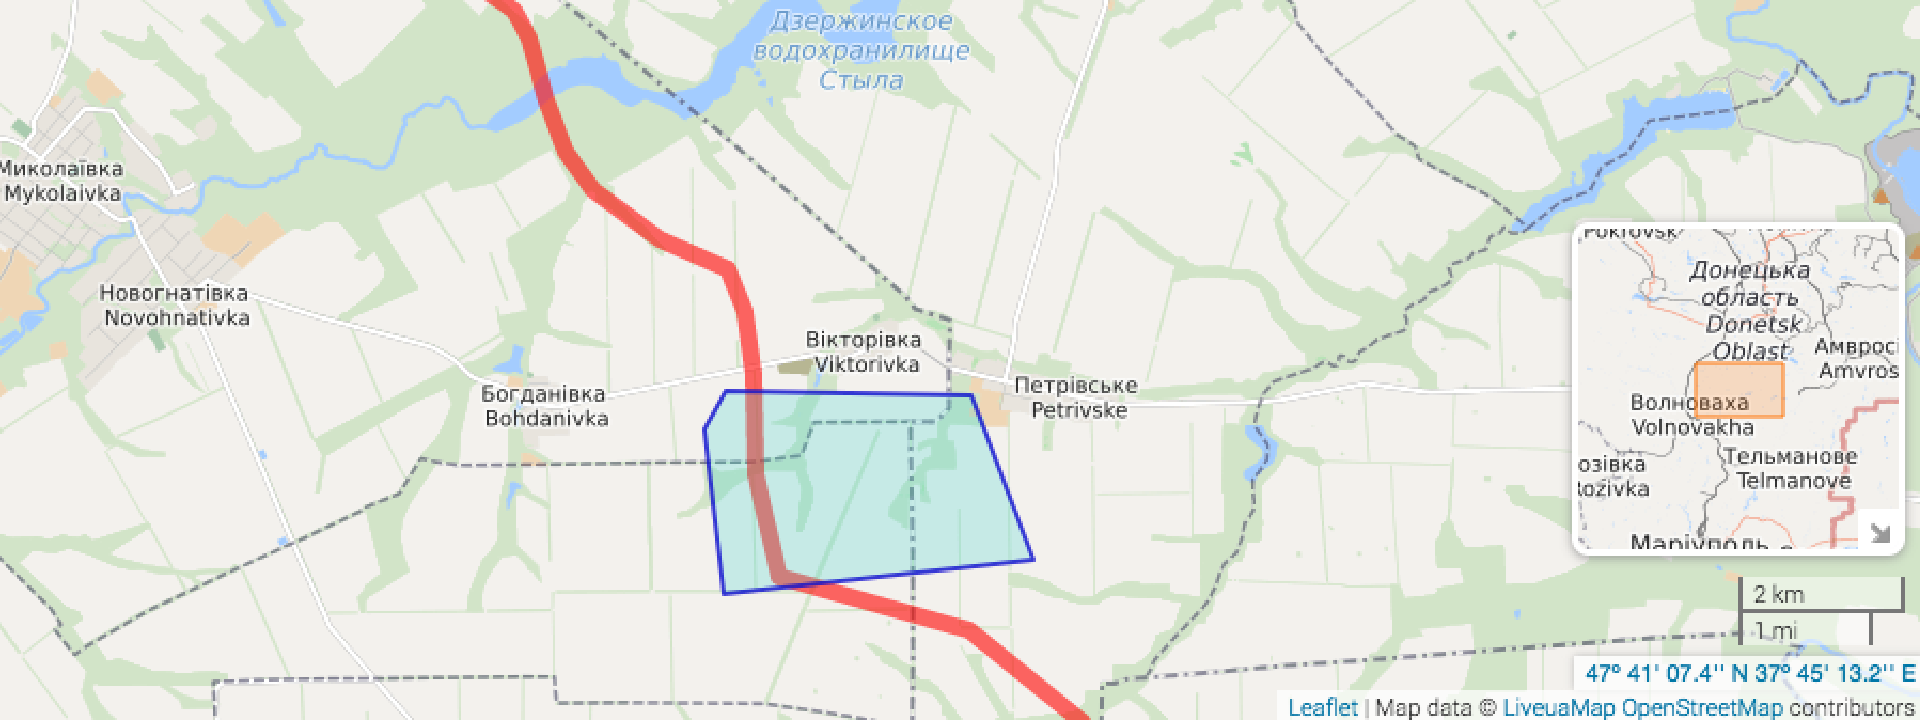 Military Engagement at the Petrivske Disengagement Area